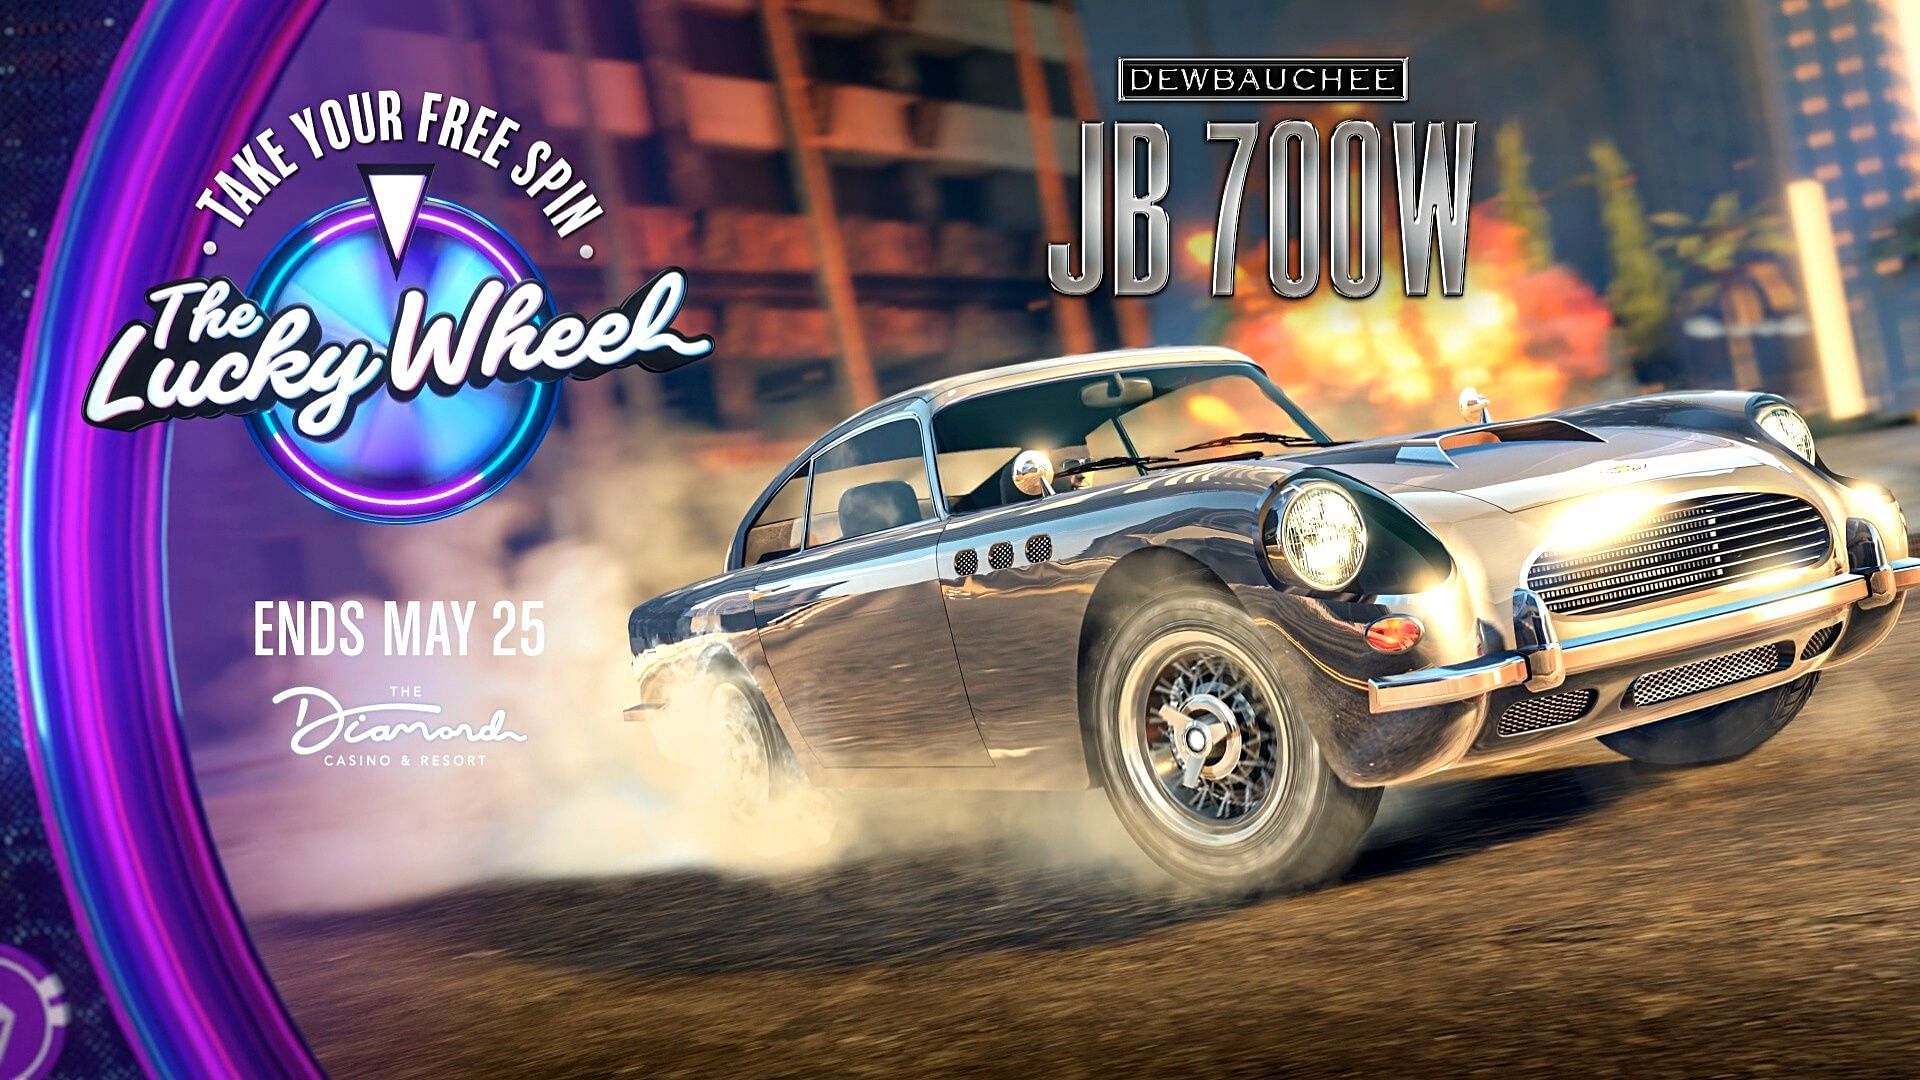 JB 700W is the Casino Podium award in this week&#039;s GTA Online update (Image via Rockstar Games)